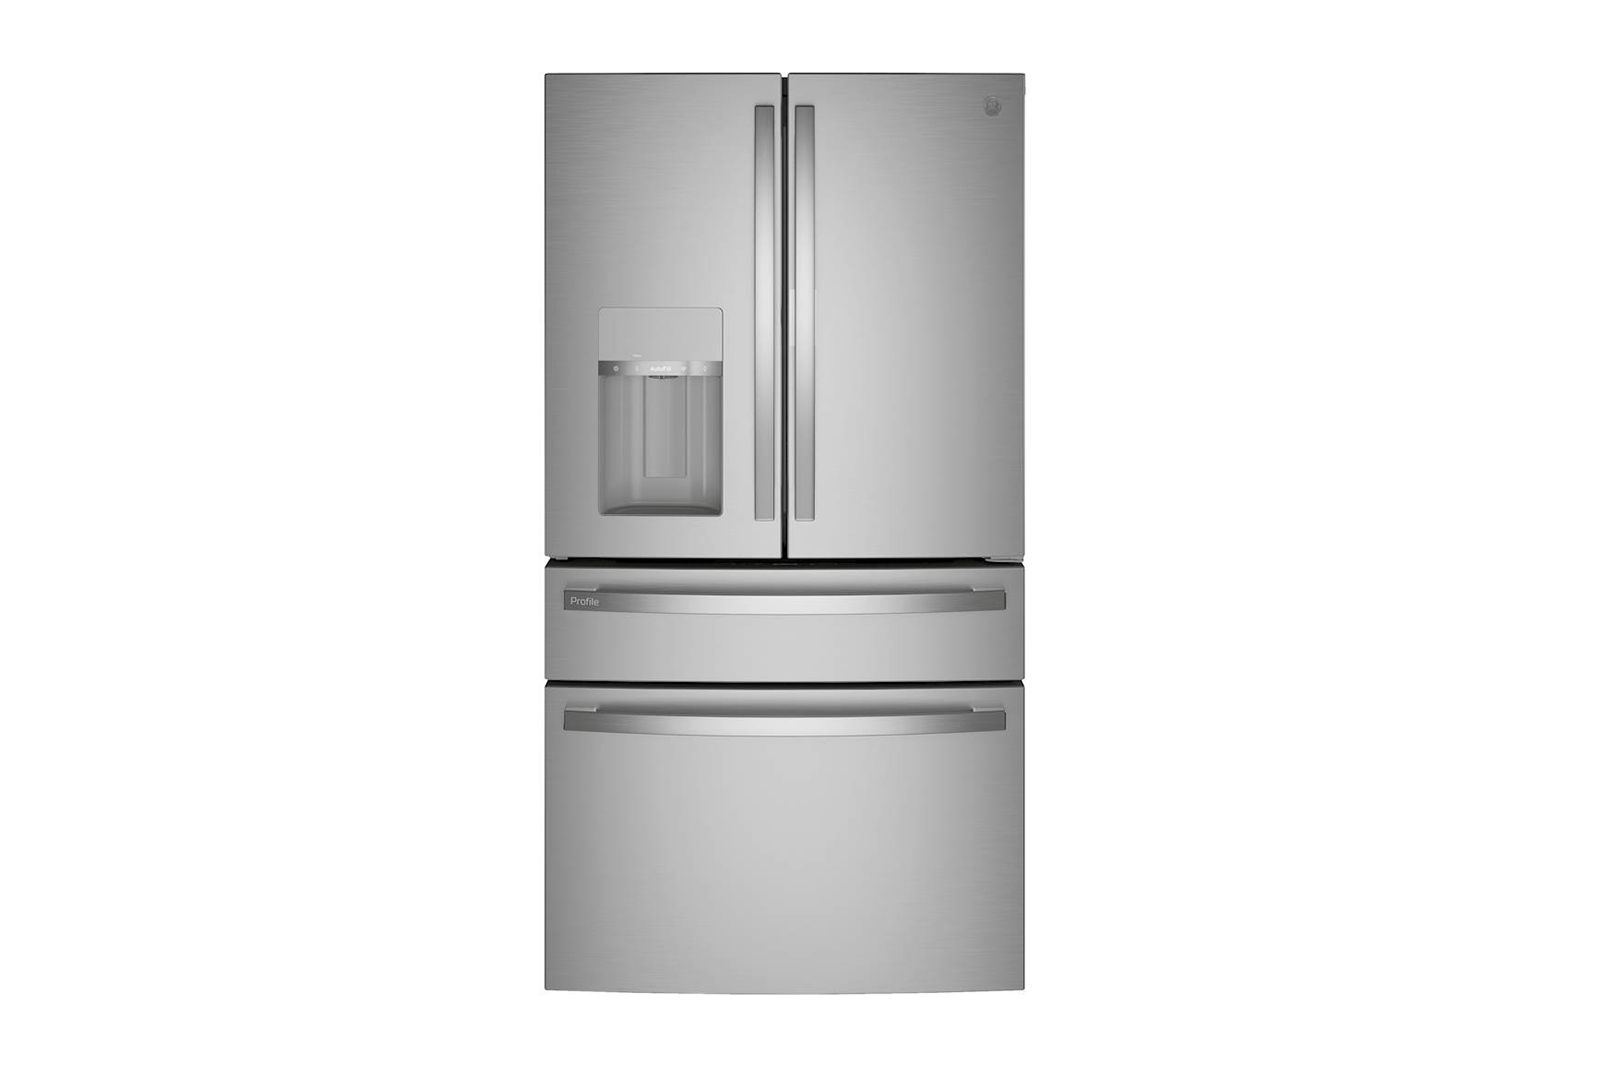 GE profile smart refrigerator